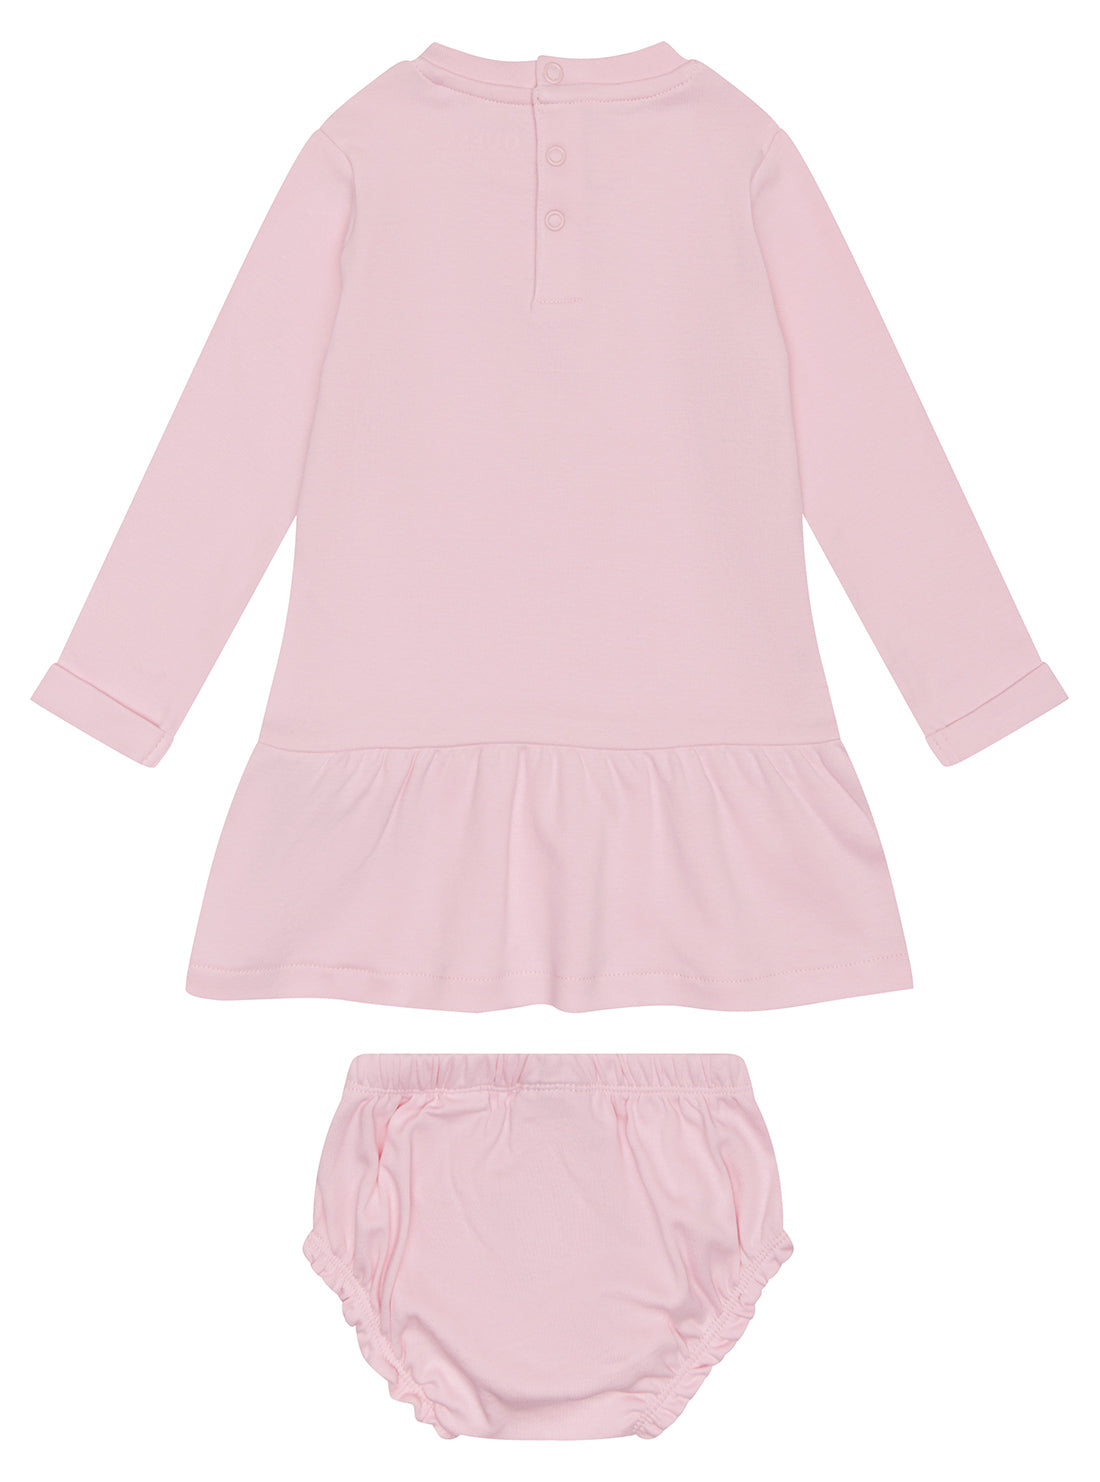 GUESS Pink Long Sleeve Interlock Dress and Panty (0-12M) back view